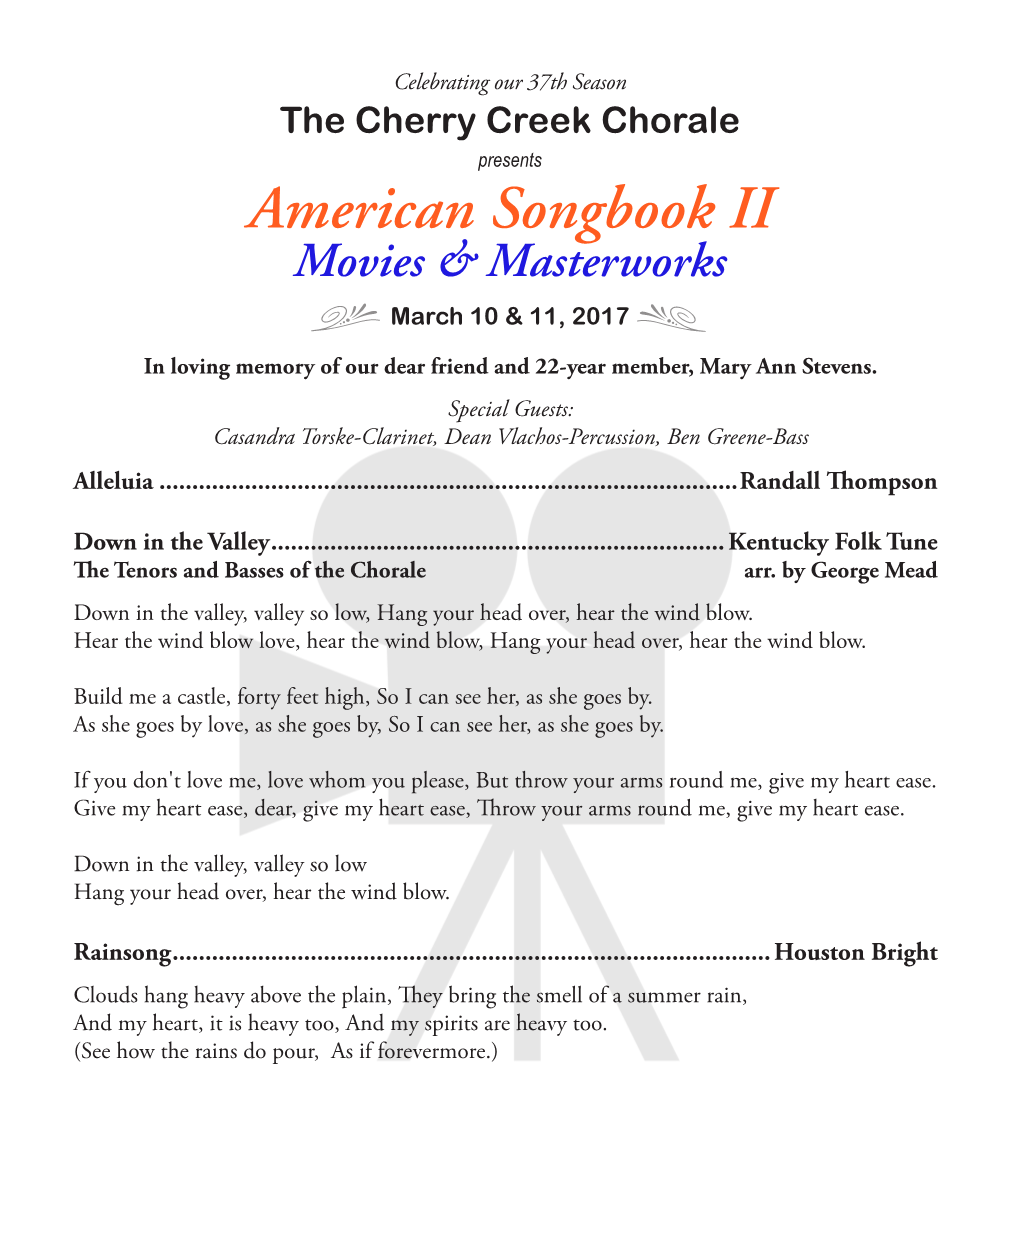 American Songbook II Movies & Masterworks March 10 & 11, 2017